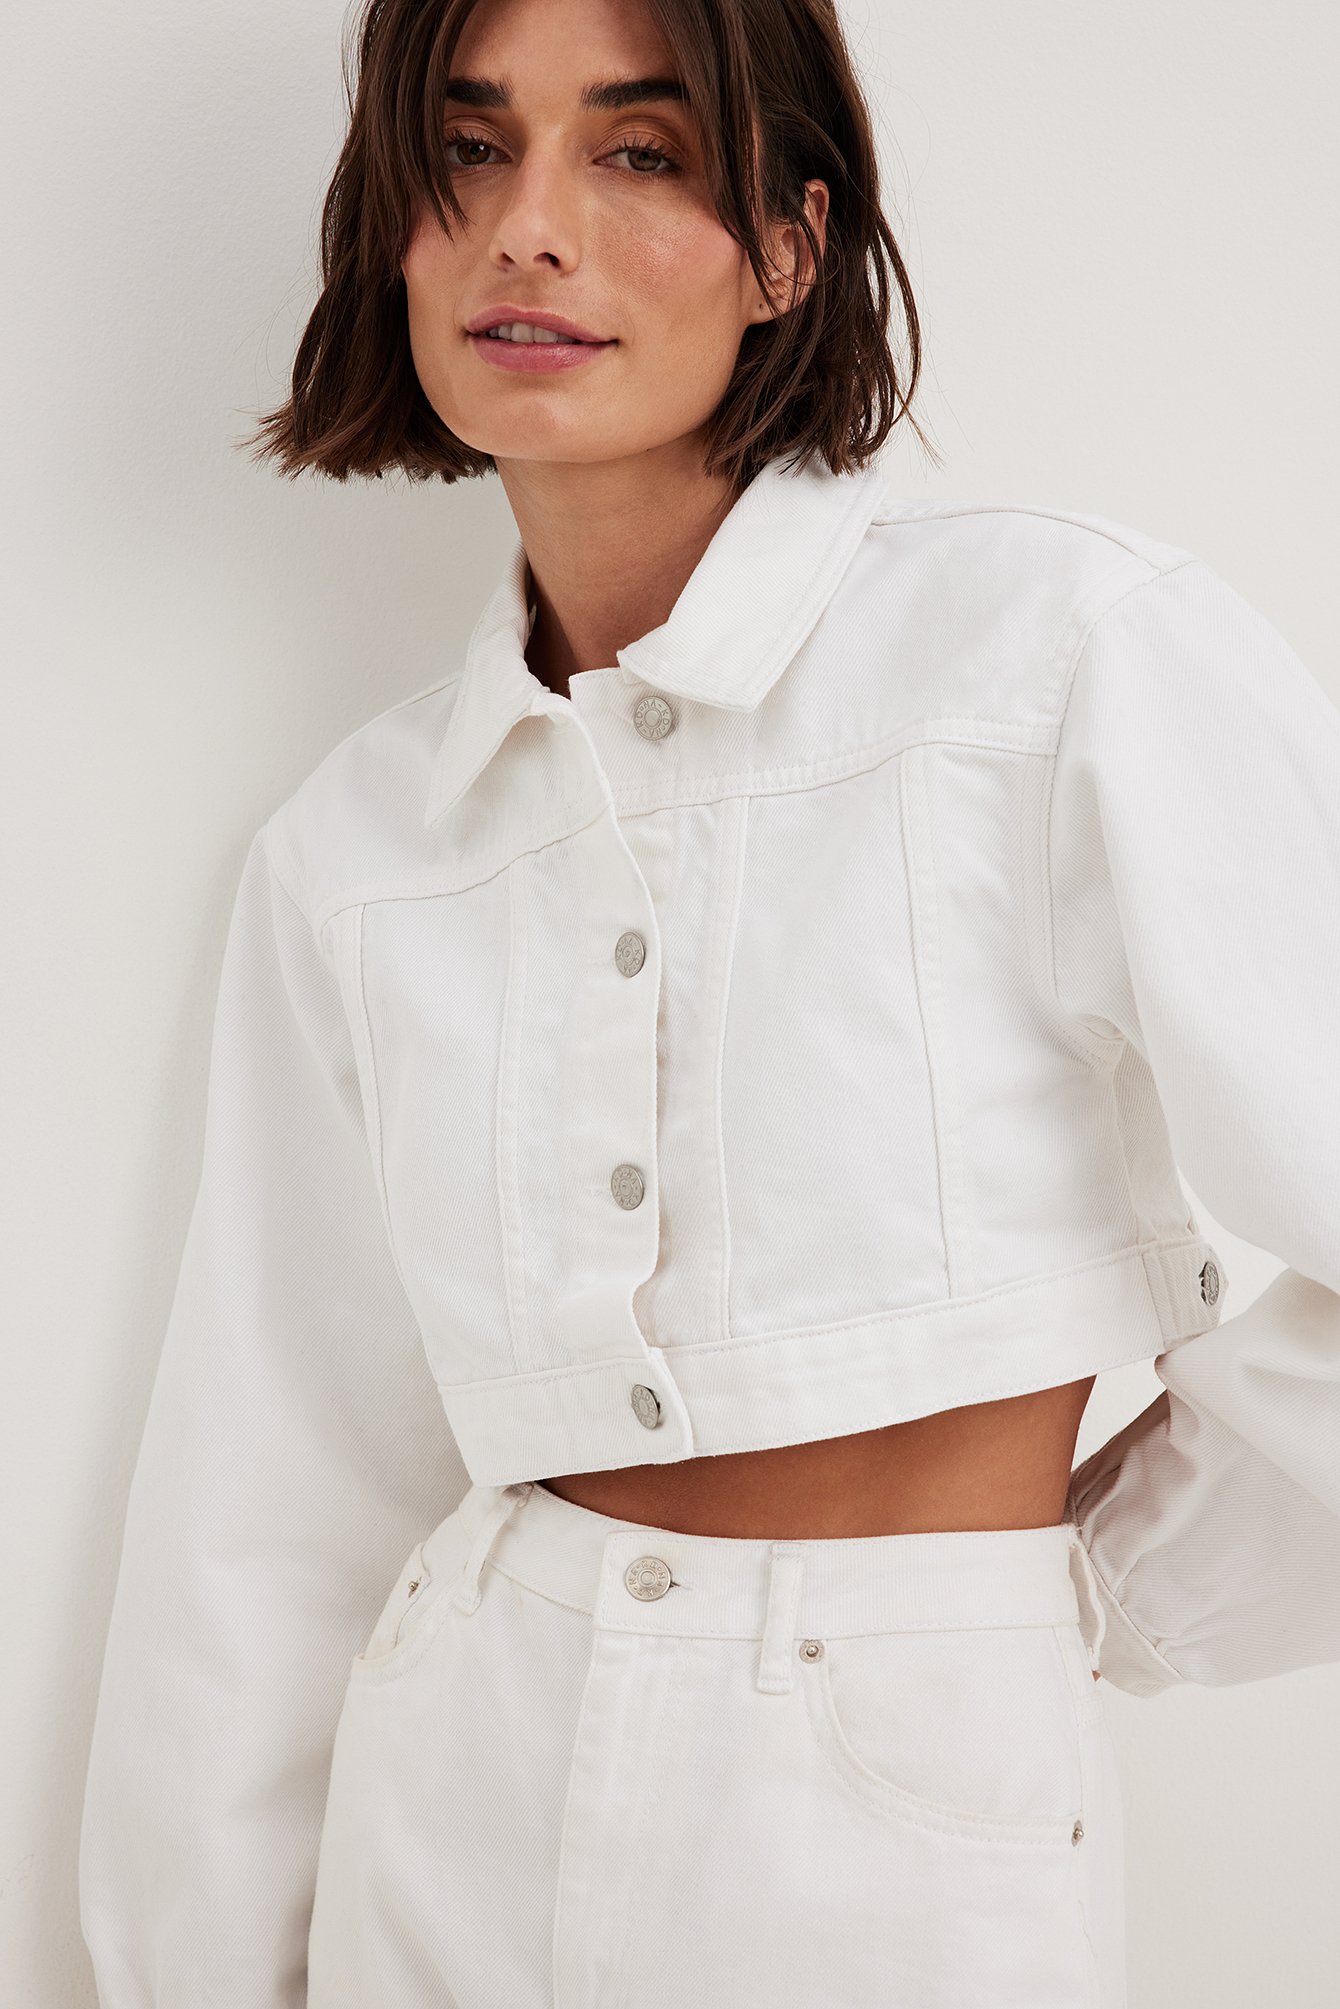 Buy XPOSE Women White Solid Crop Denim Jacket at Amazon.in